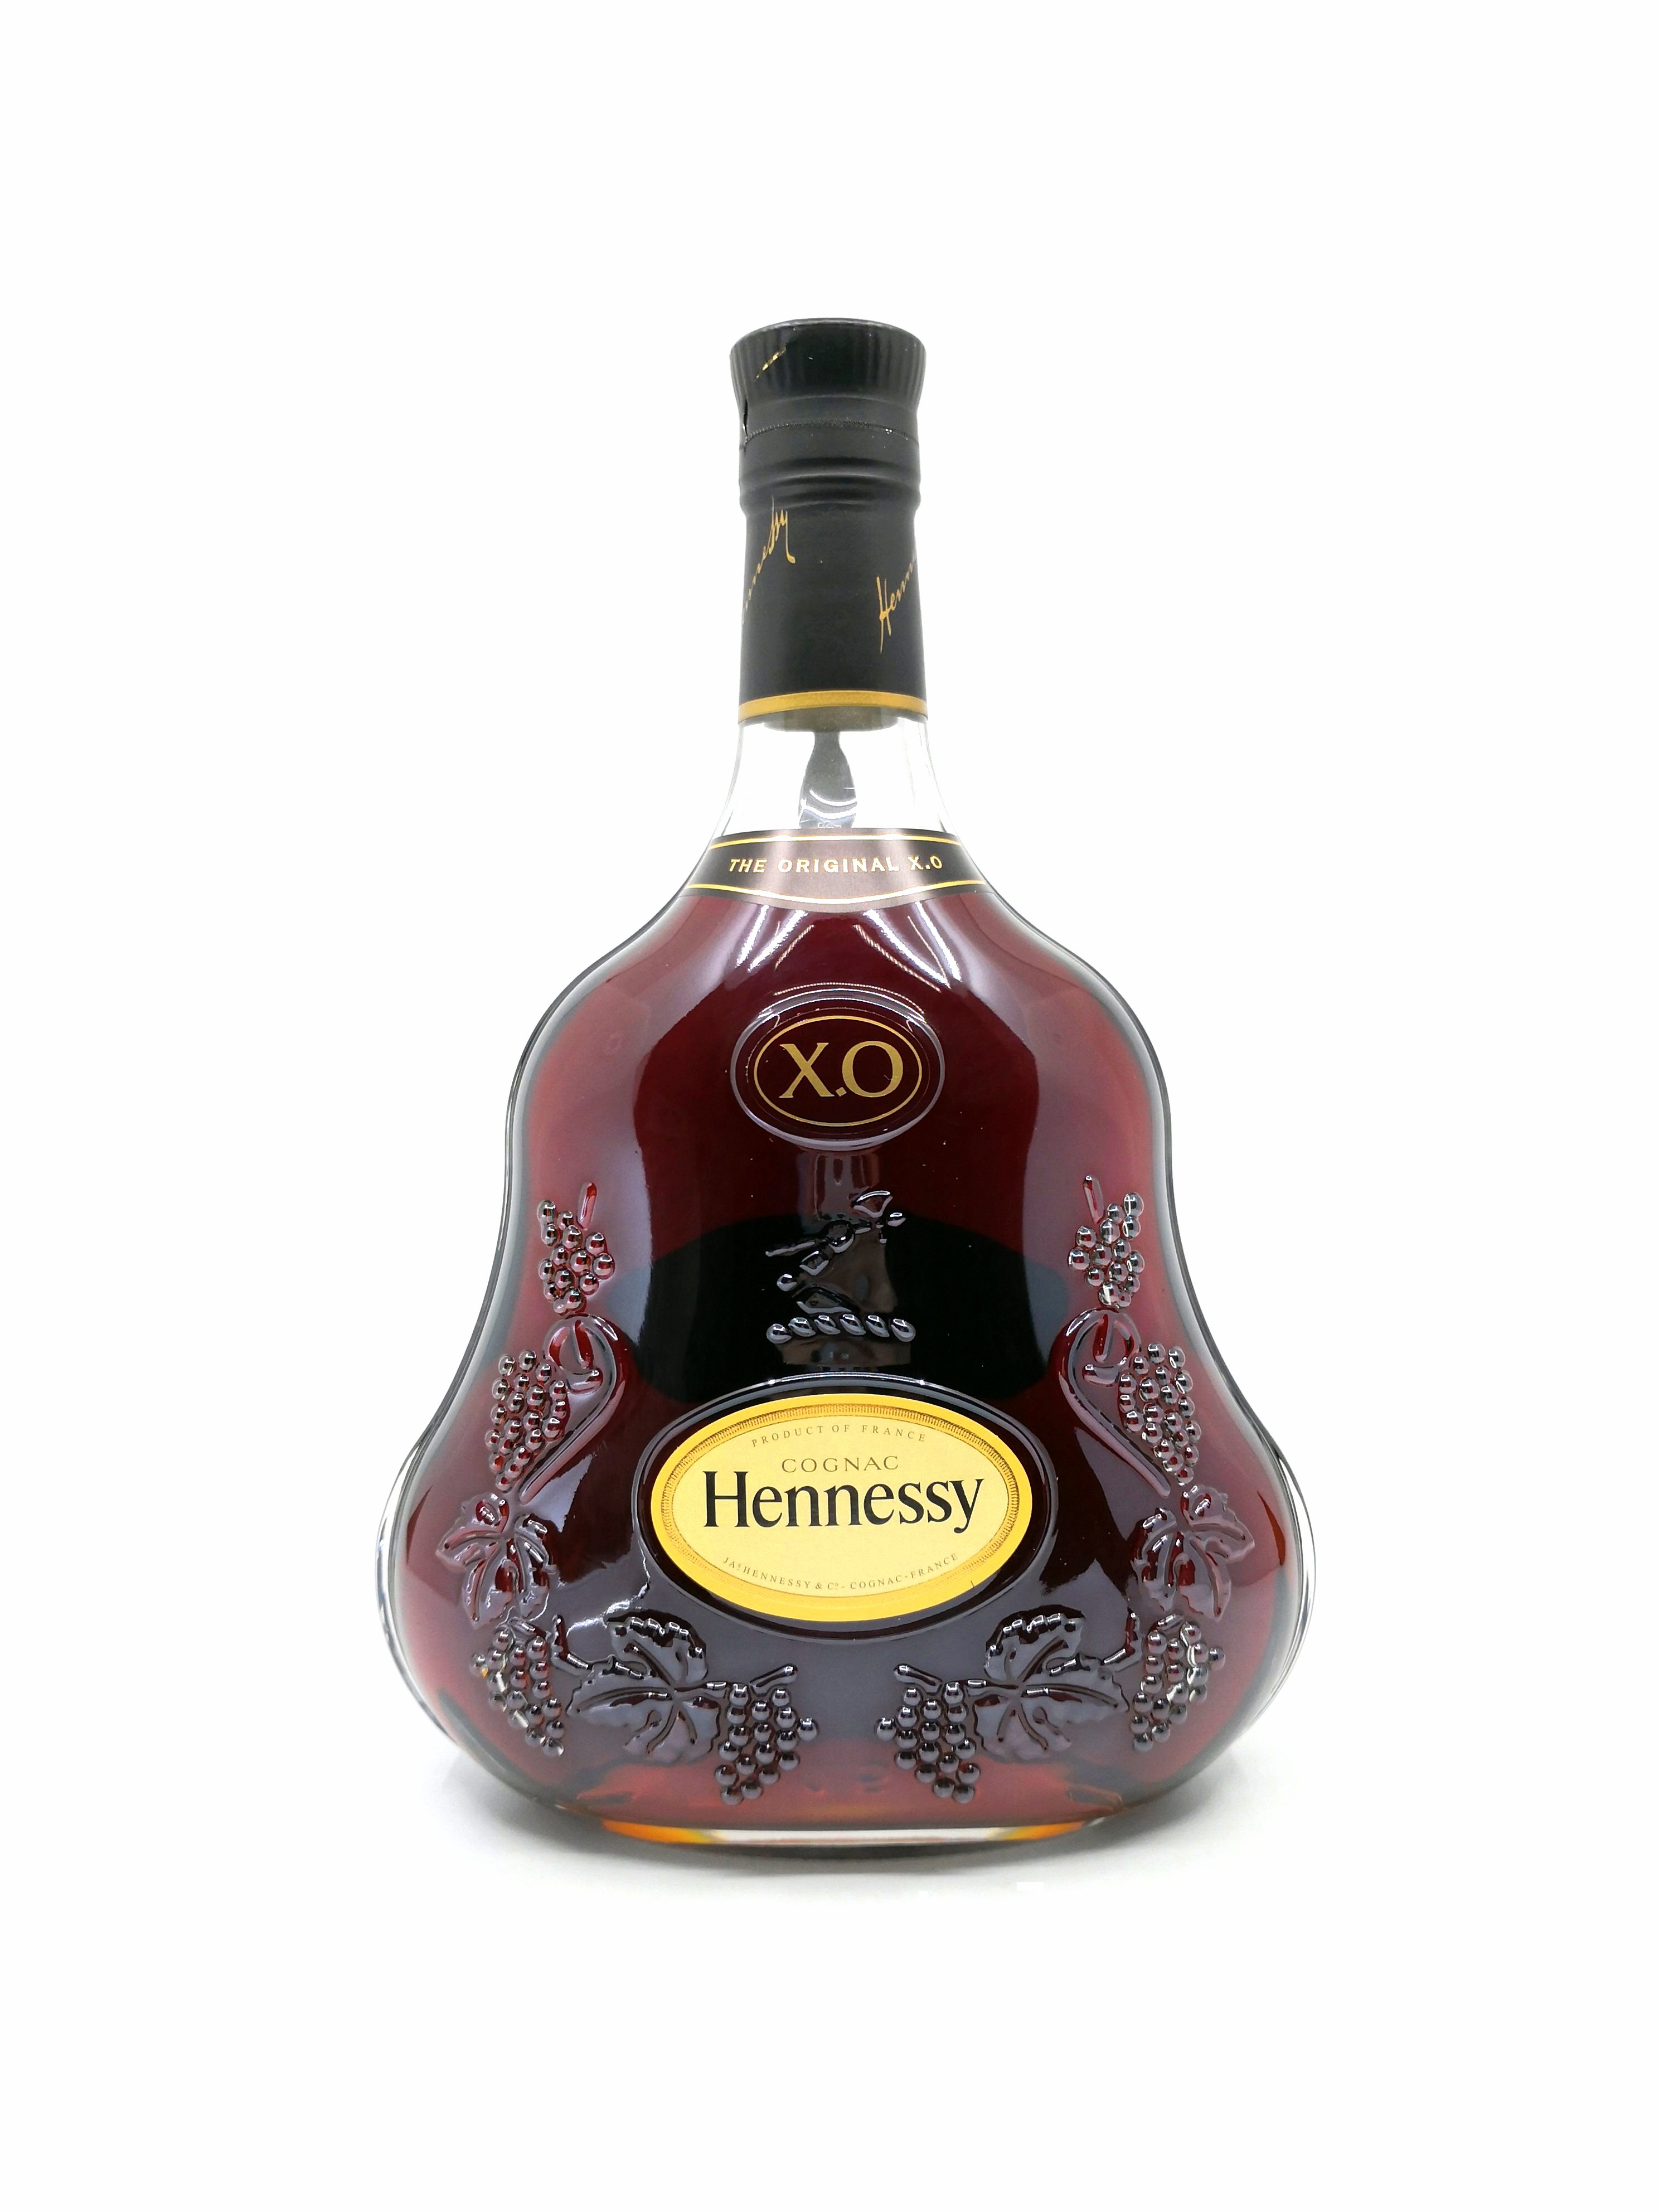 Hennessy XO Cognac 1.5L